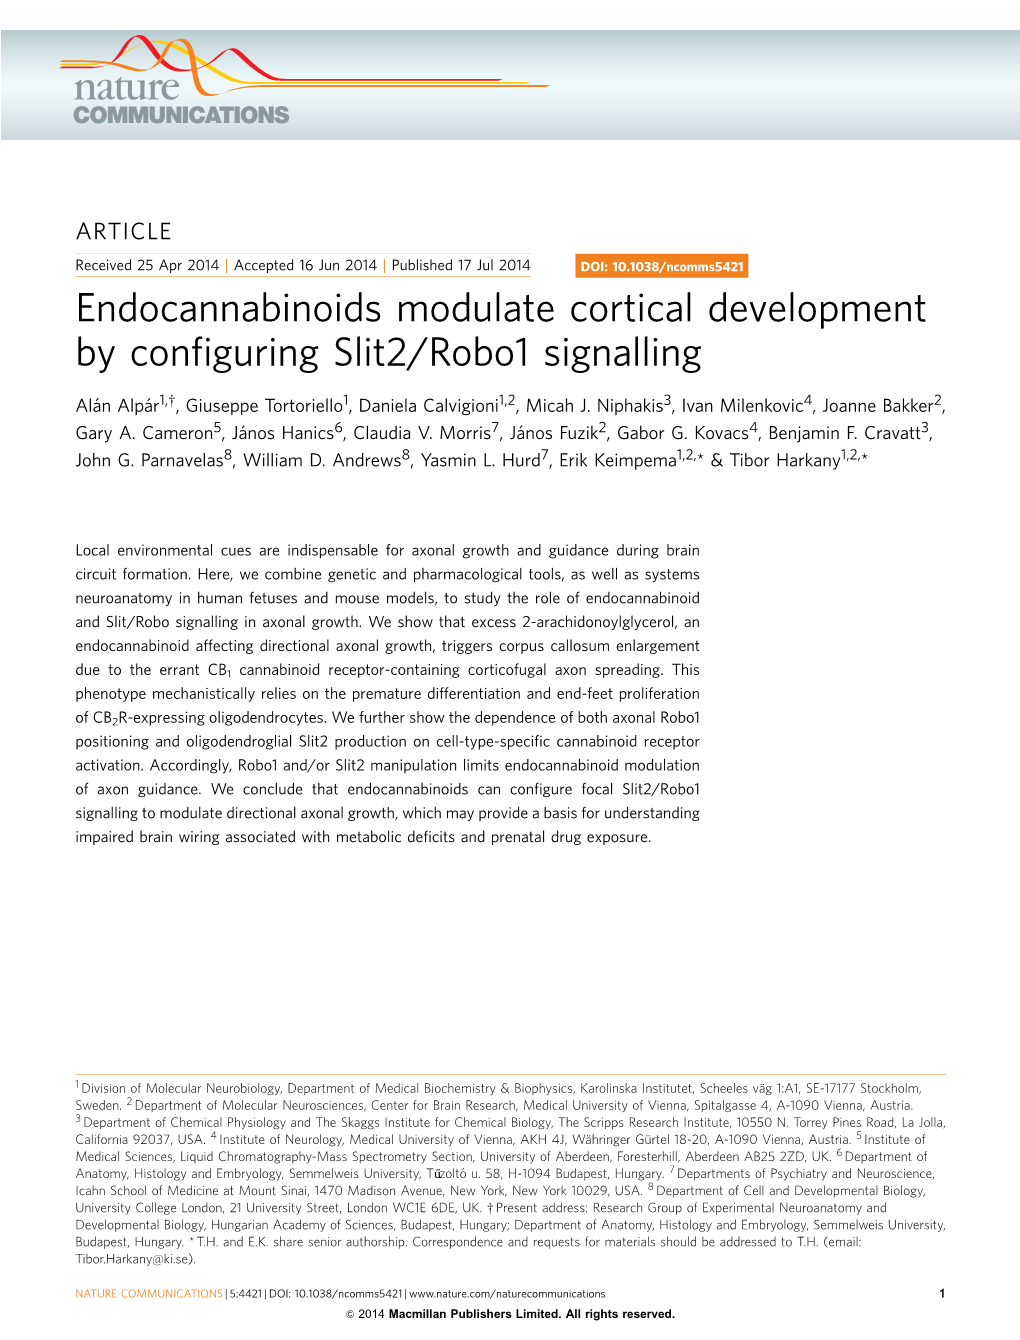 Endocannabinoids Modulate Cortical Development by Configuring Slit2/Robo1 Signalling